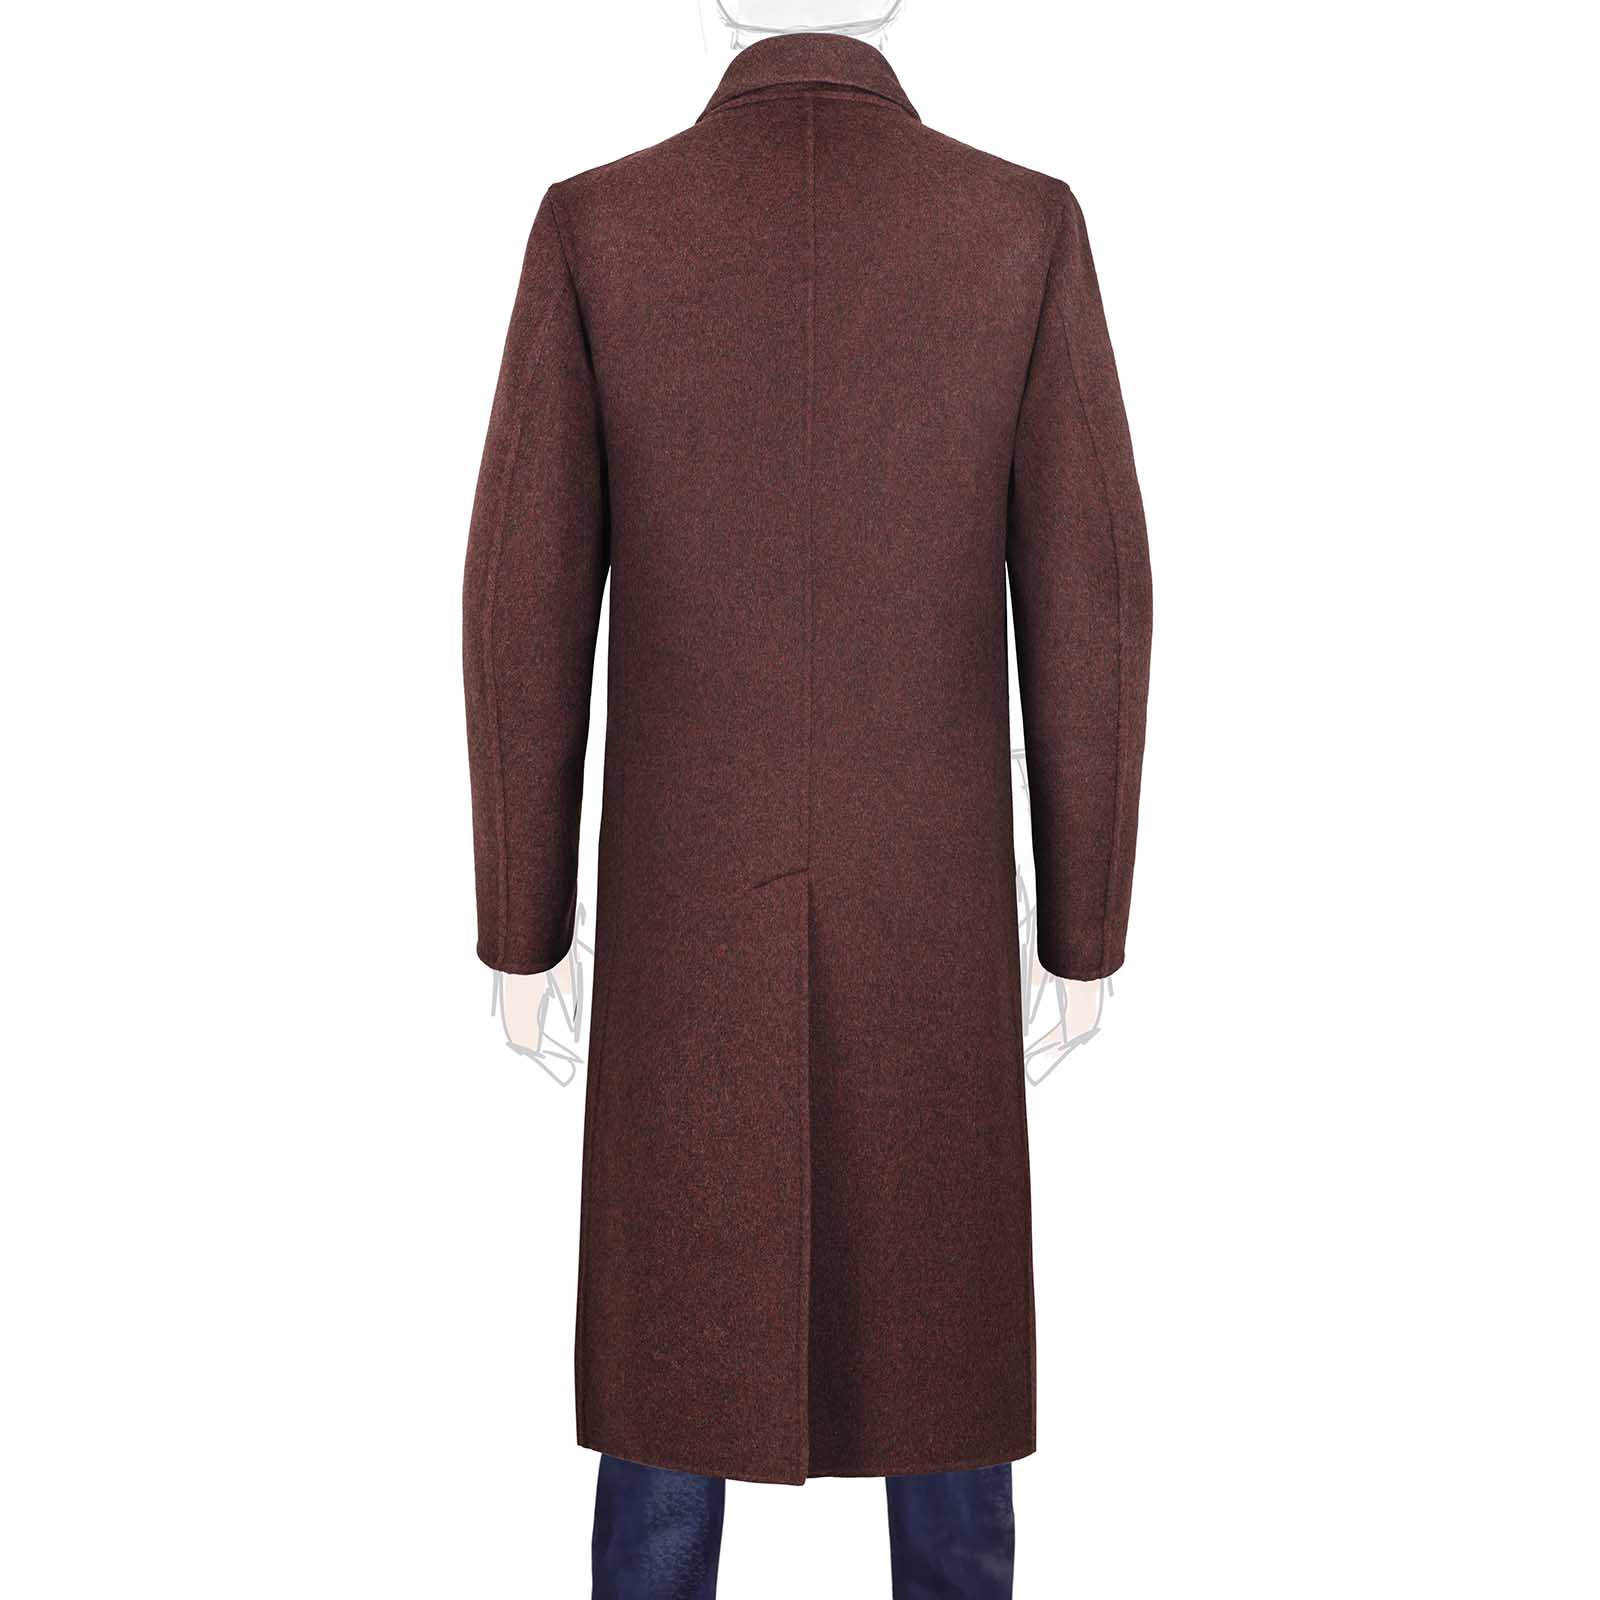 Mariano Rubinacci - Burgundy cashmere coat Limited Edition